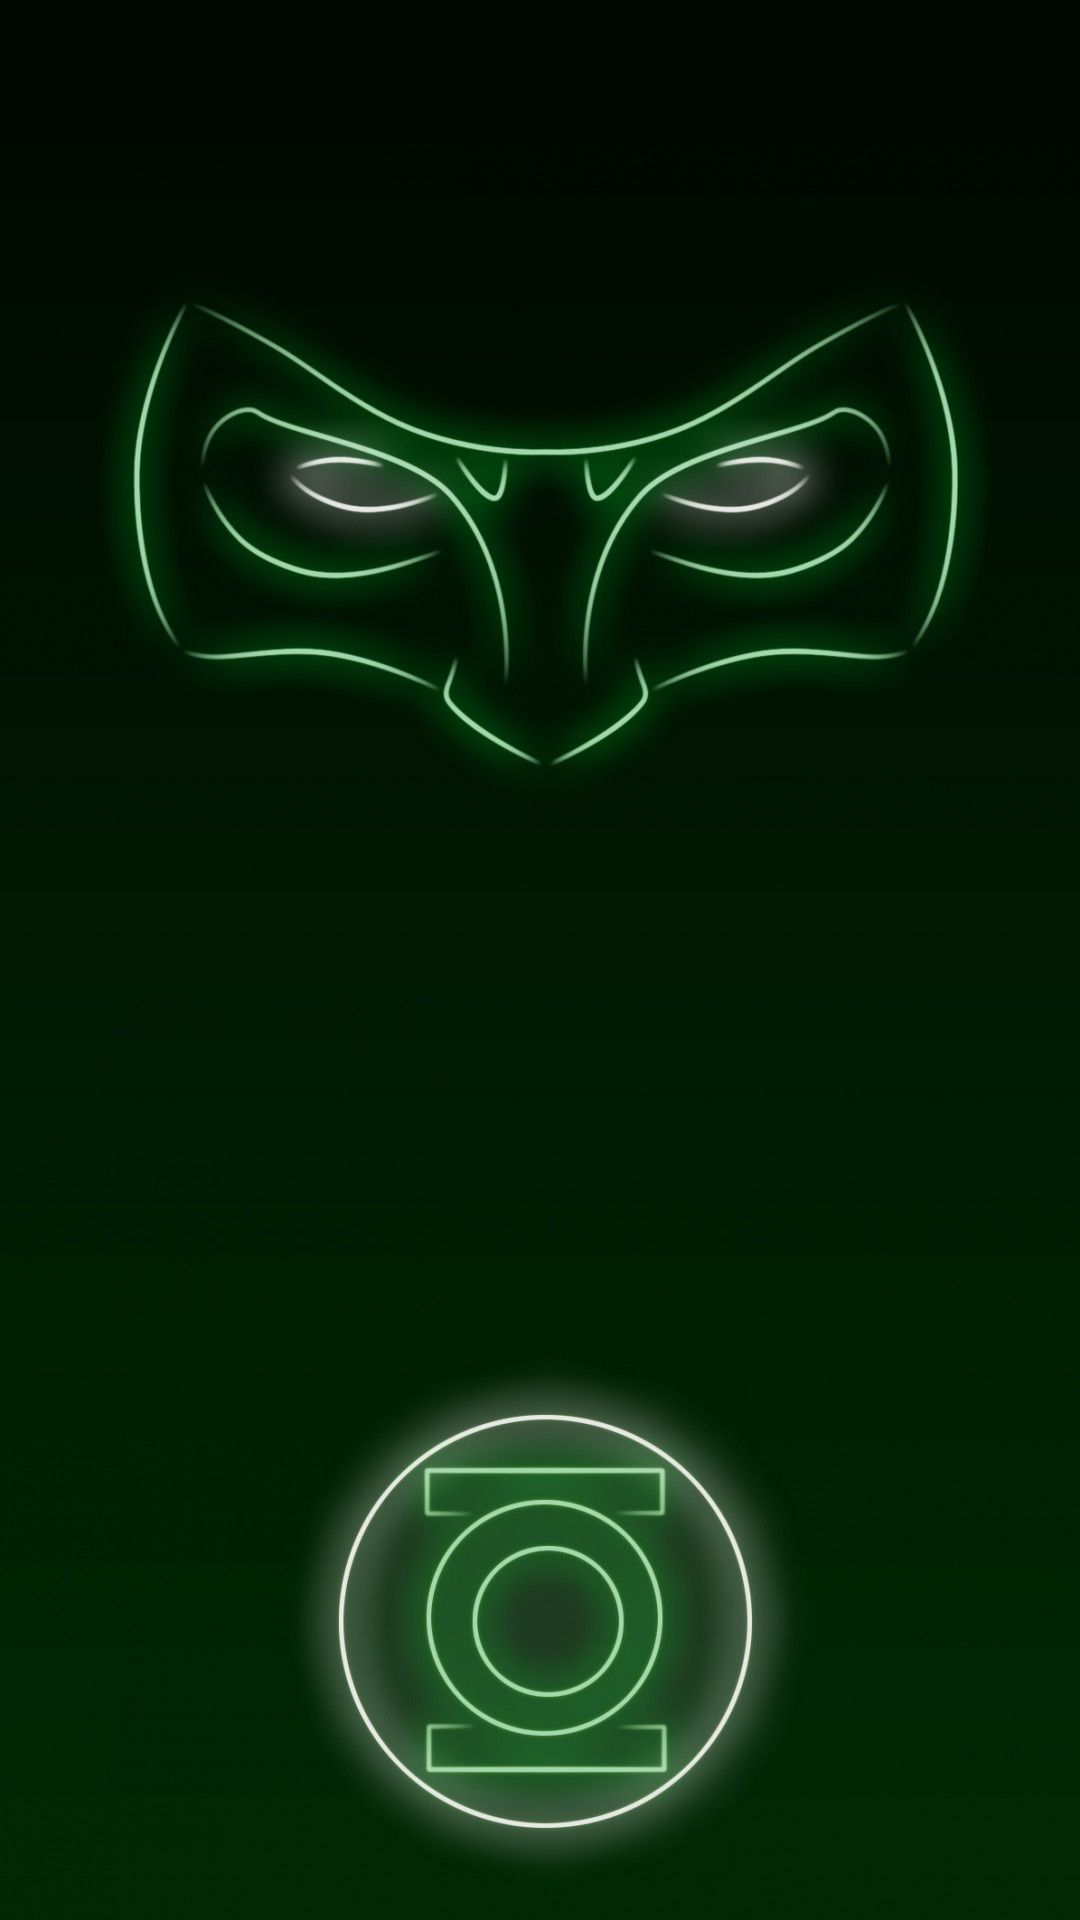 Green Lantern Corps iPhone Wallpaper Free Green Lantern Corps iPhone Background